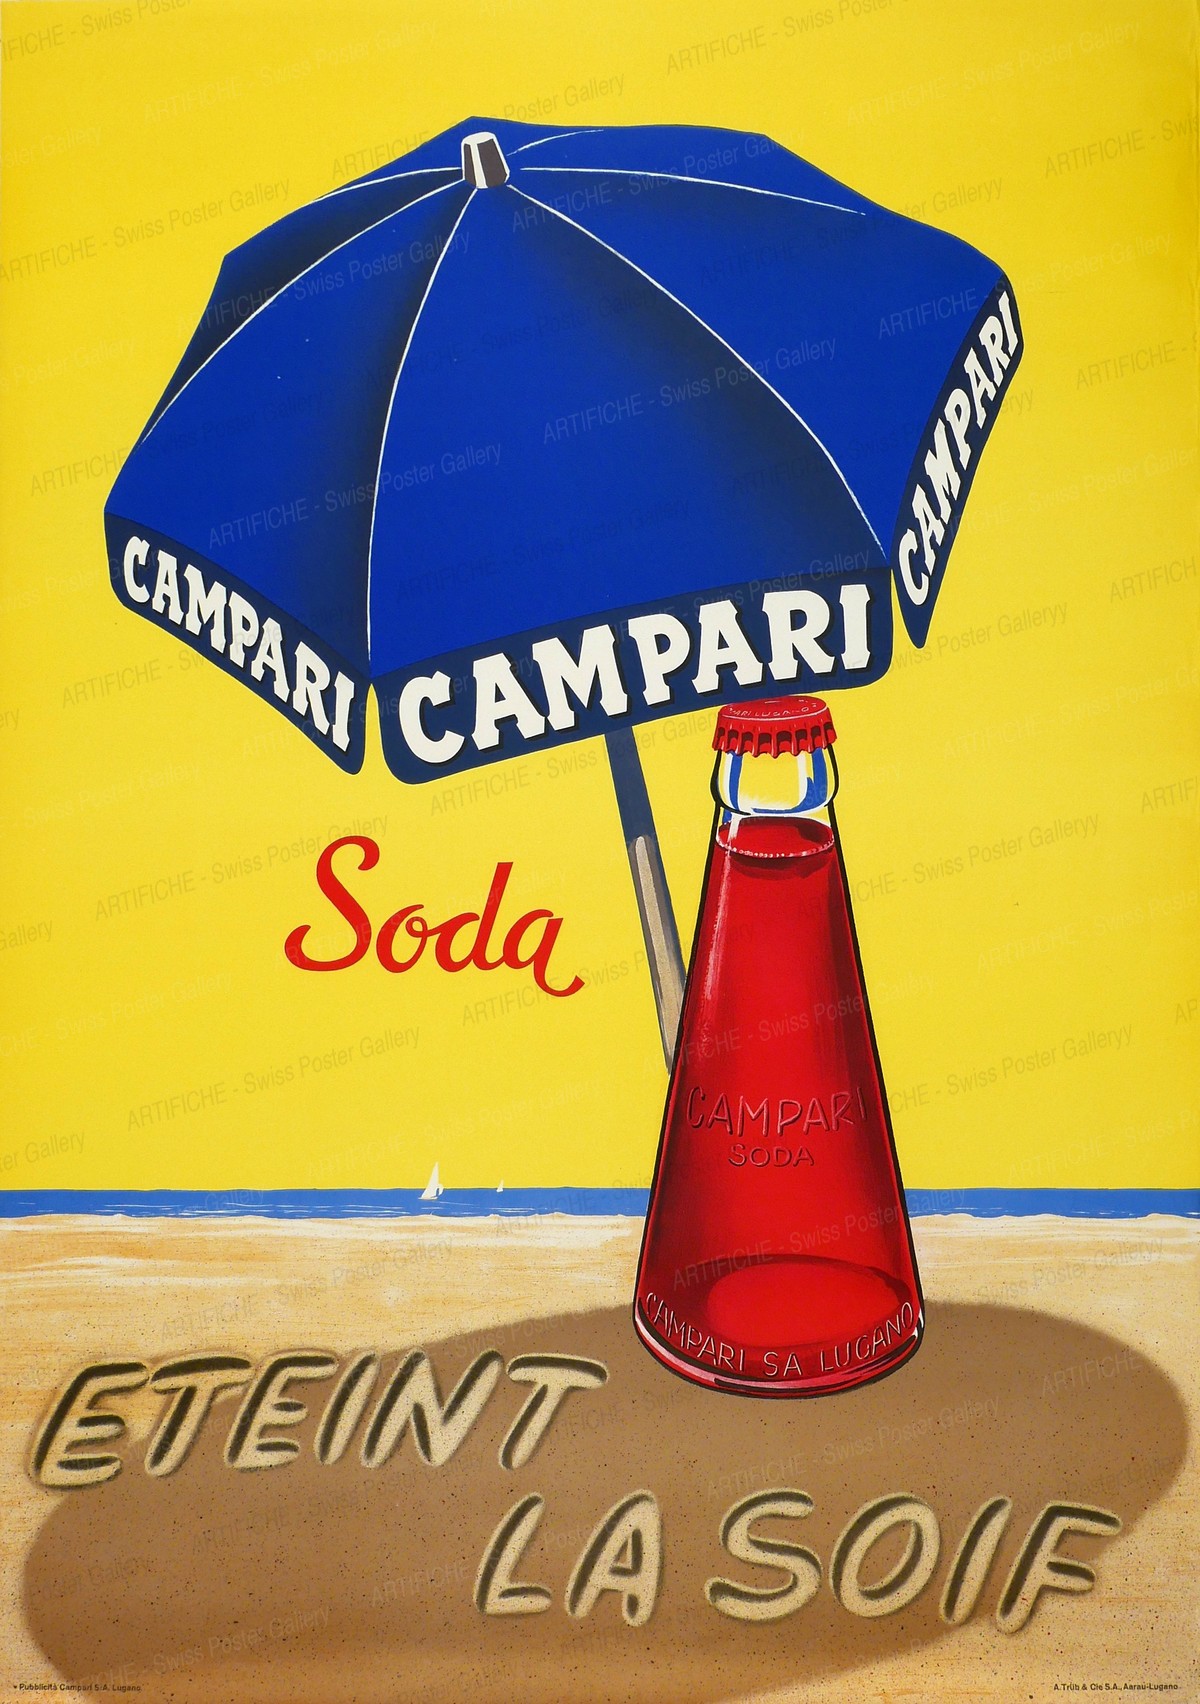 Campari Soda – Quenches thirst, Artist unknown